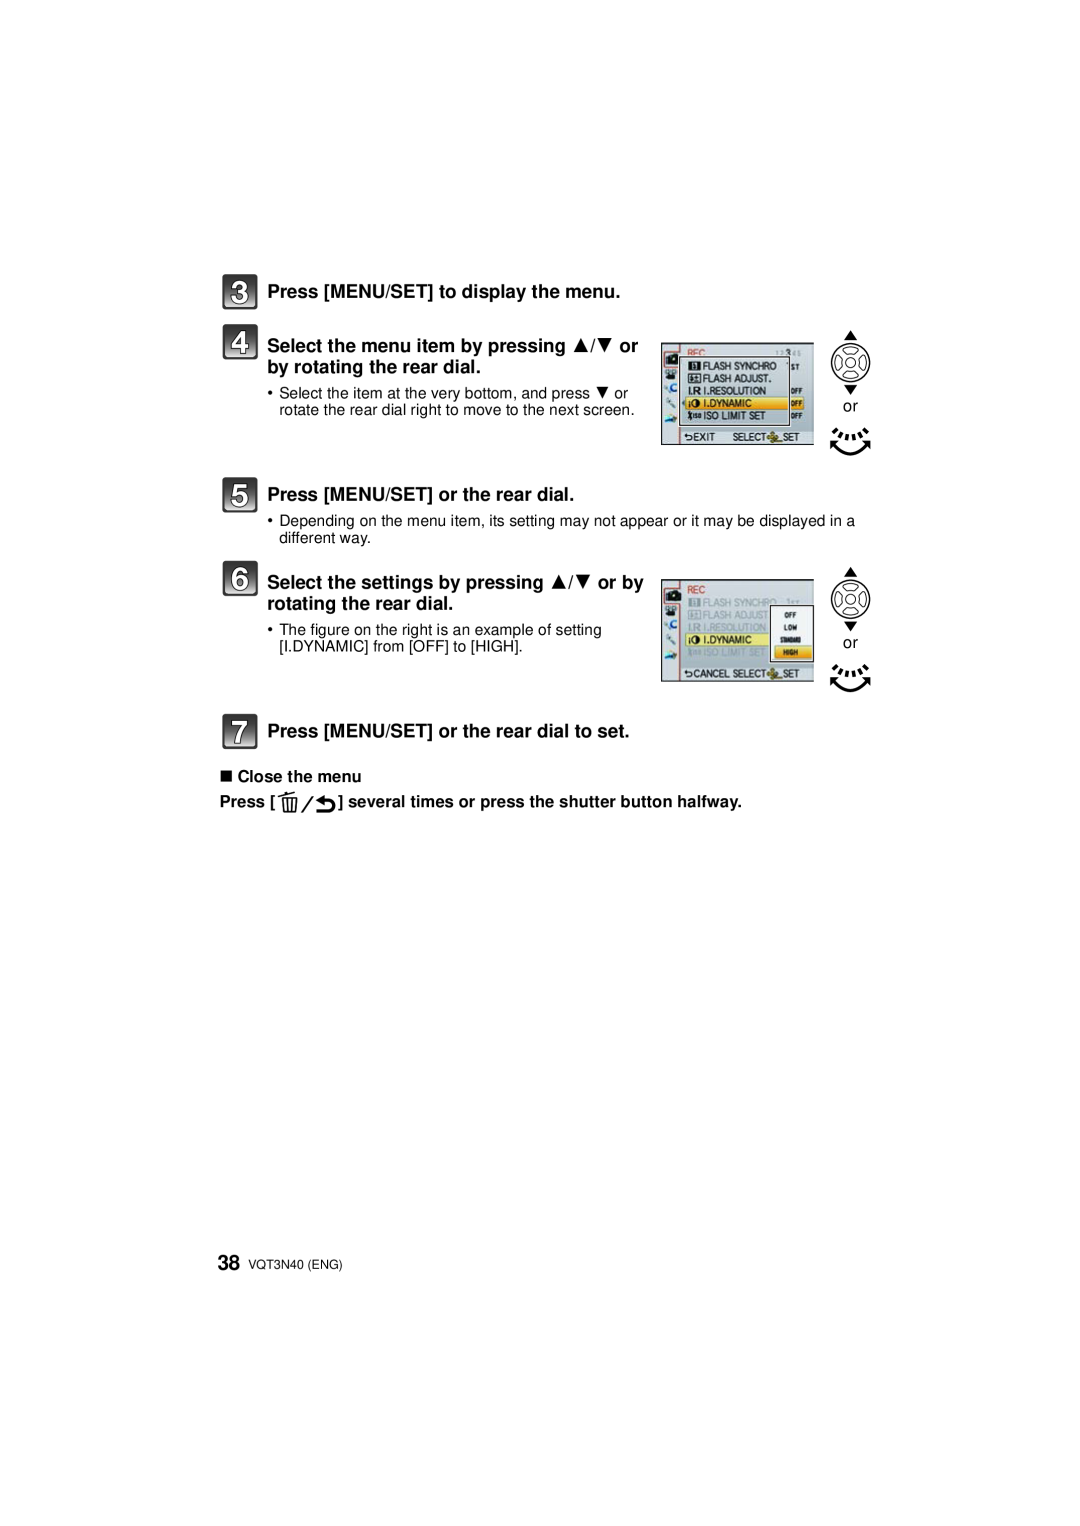 Panasonic DMC-G3W Press MENU/SET to display the menu, Select the menu item by pressing 3/4 or by rotating the rear dial 